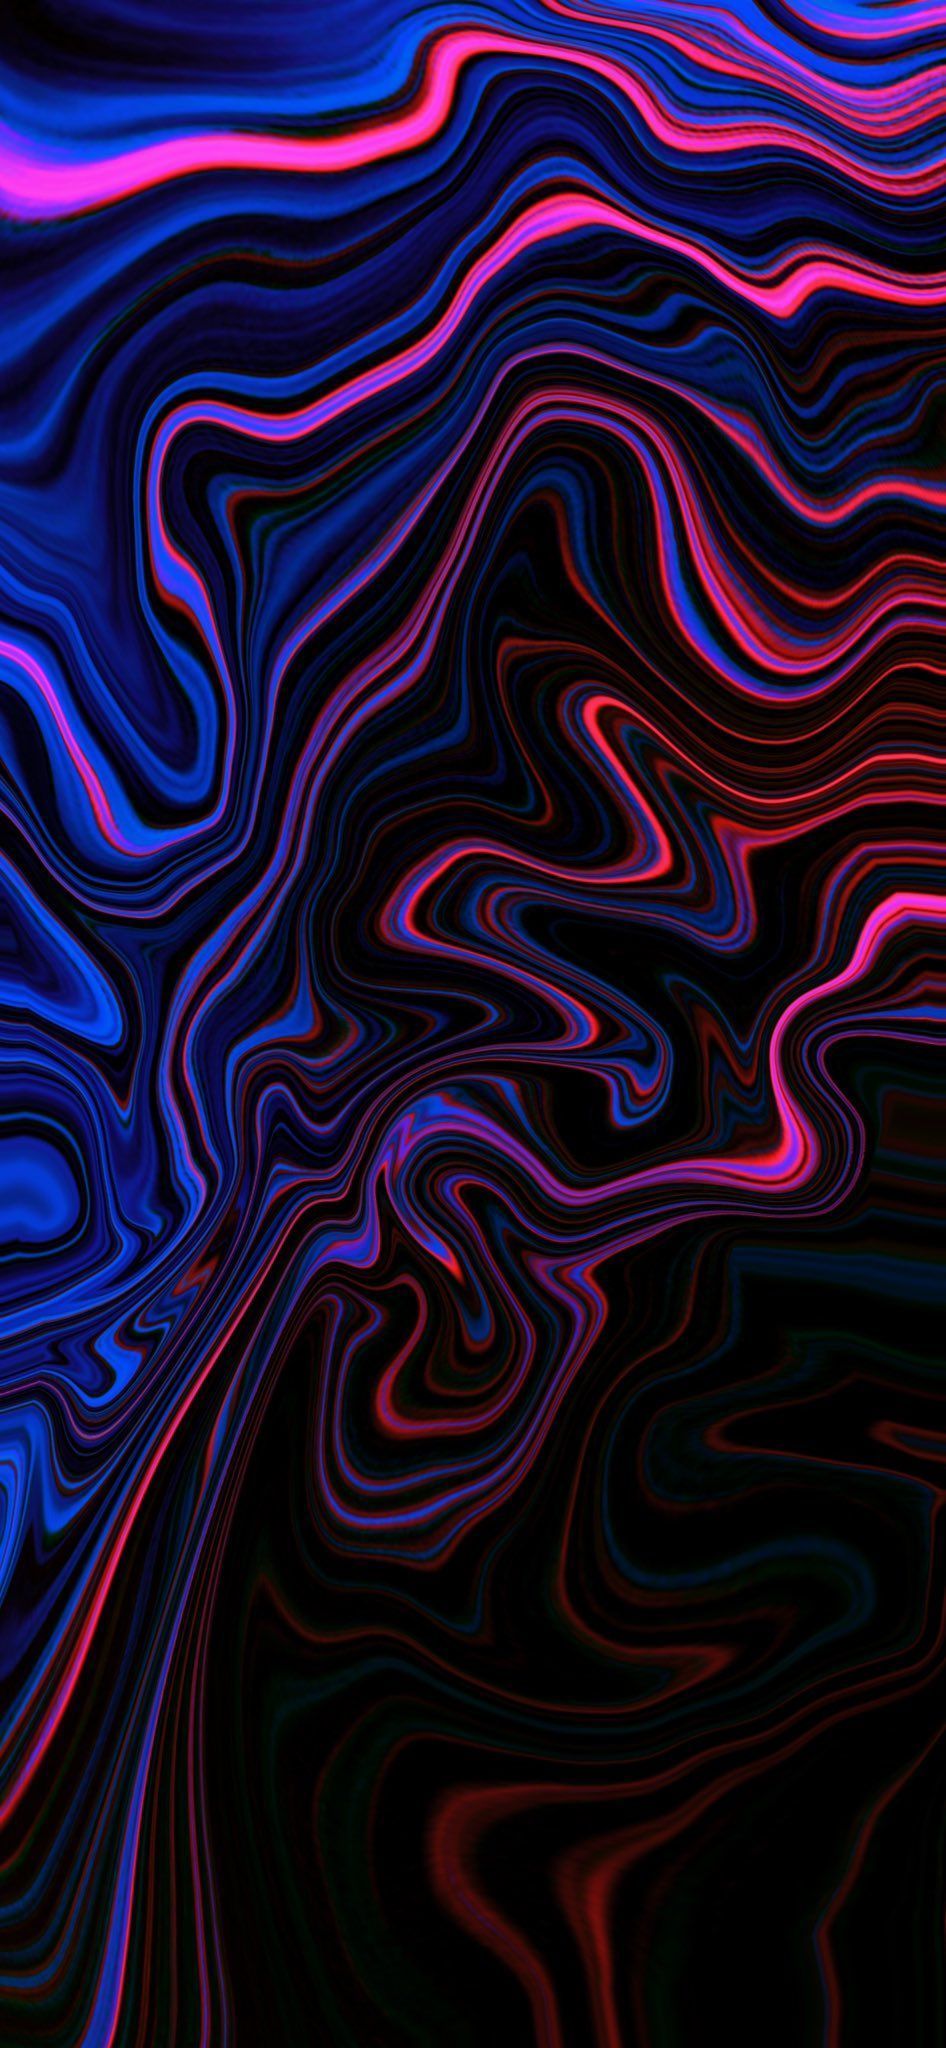 Neon Minimalist iPhone Wallpaper Free Neon Minimalist iPhone Background